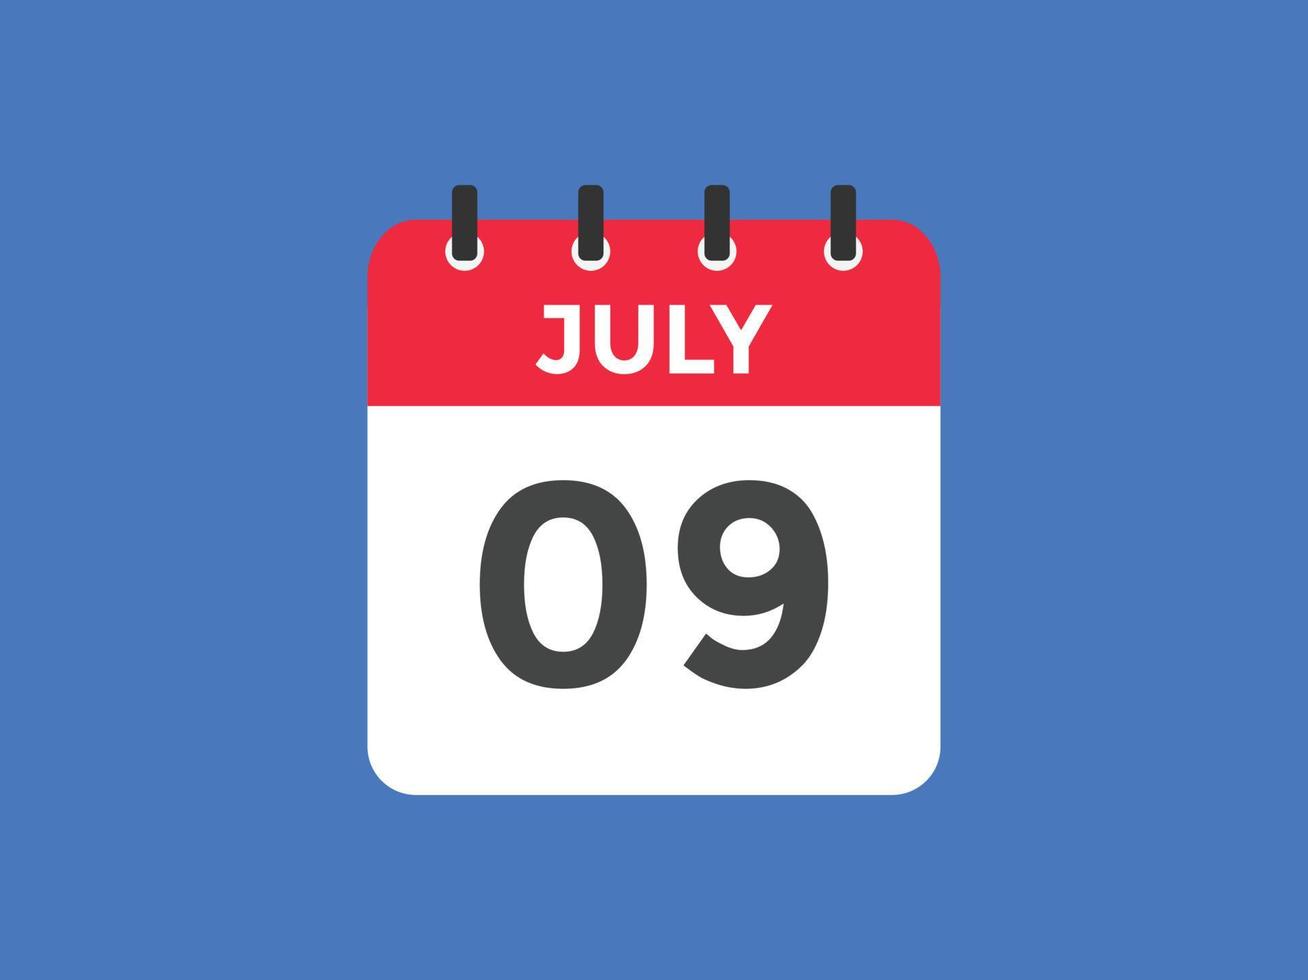 juli 9 kalender påminnelse. 9:e juli dagligen kalender ikon mall. kalender 9:e juli ikon design mall. vektor illustration